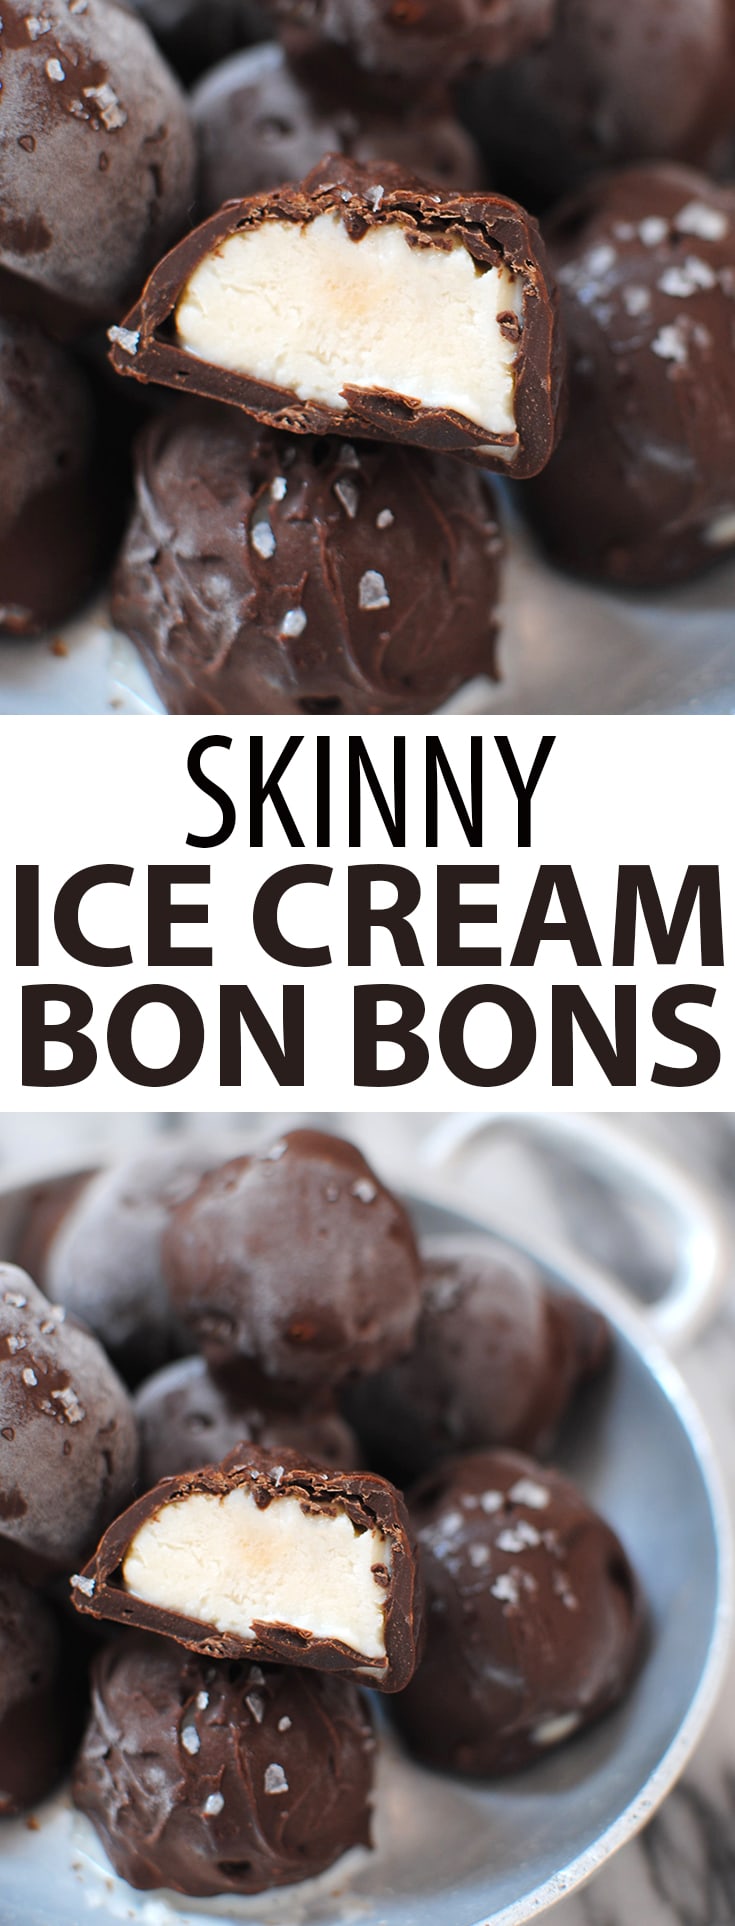 Ice Cream Bon Bons Recipe